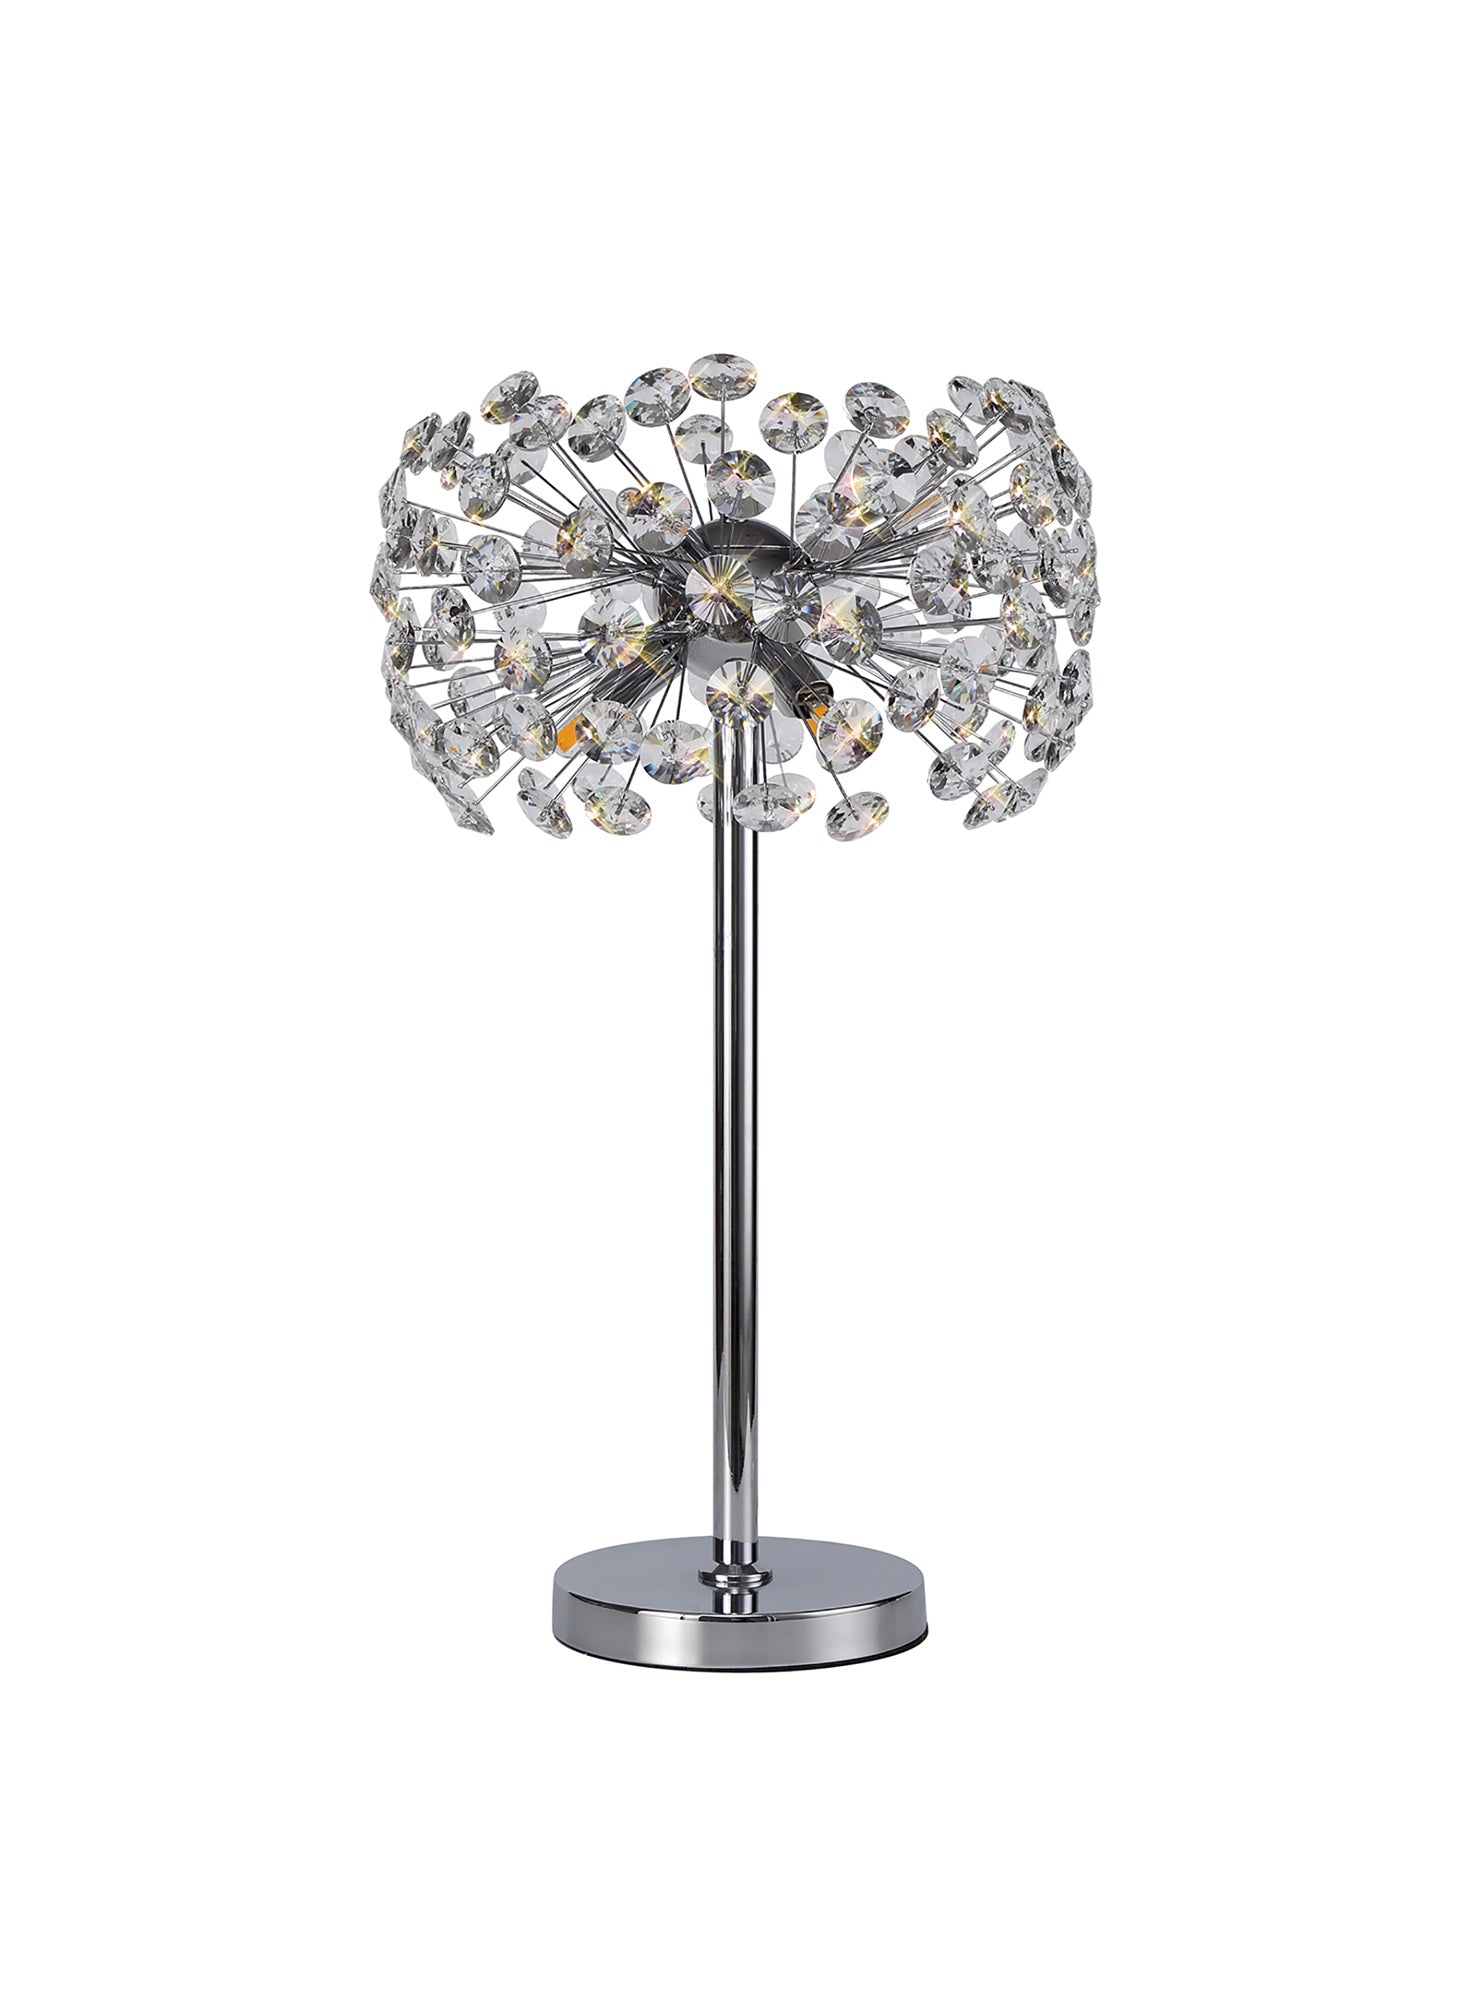 Chakkar Table Lamp 6 Light G9 Polished Chrome/Crystal LO182043